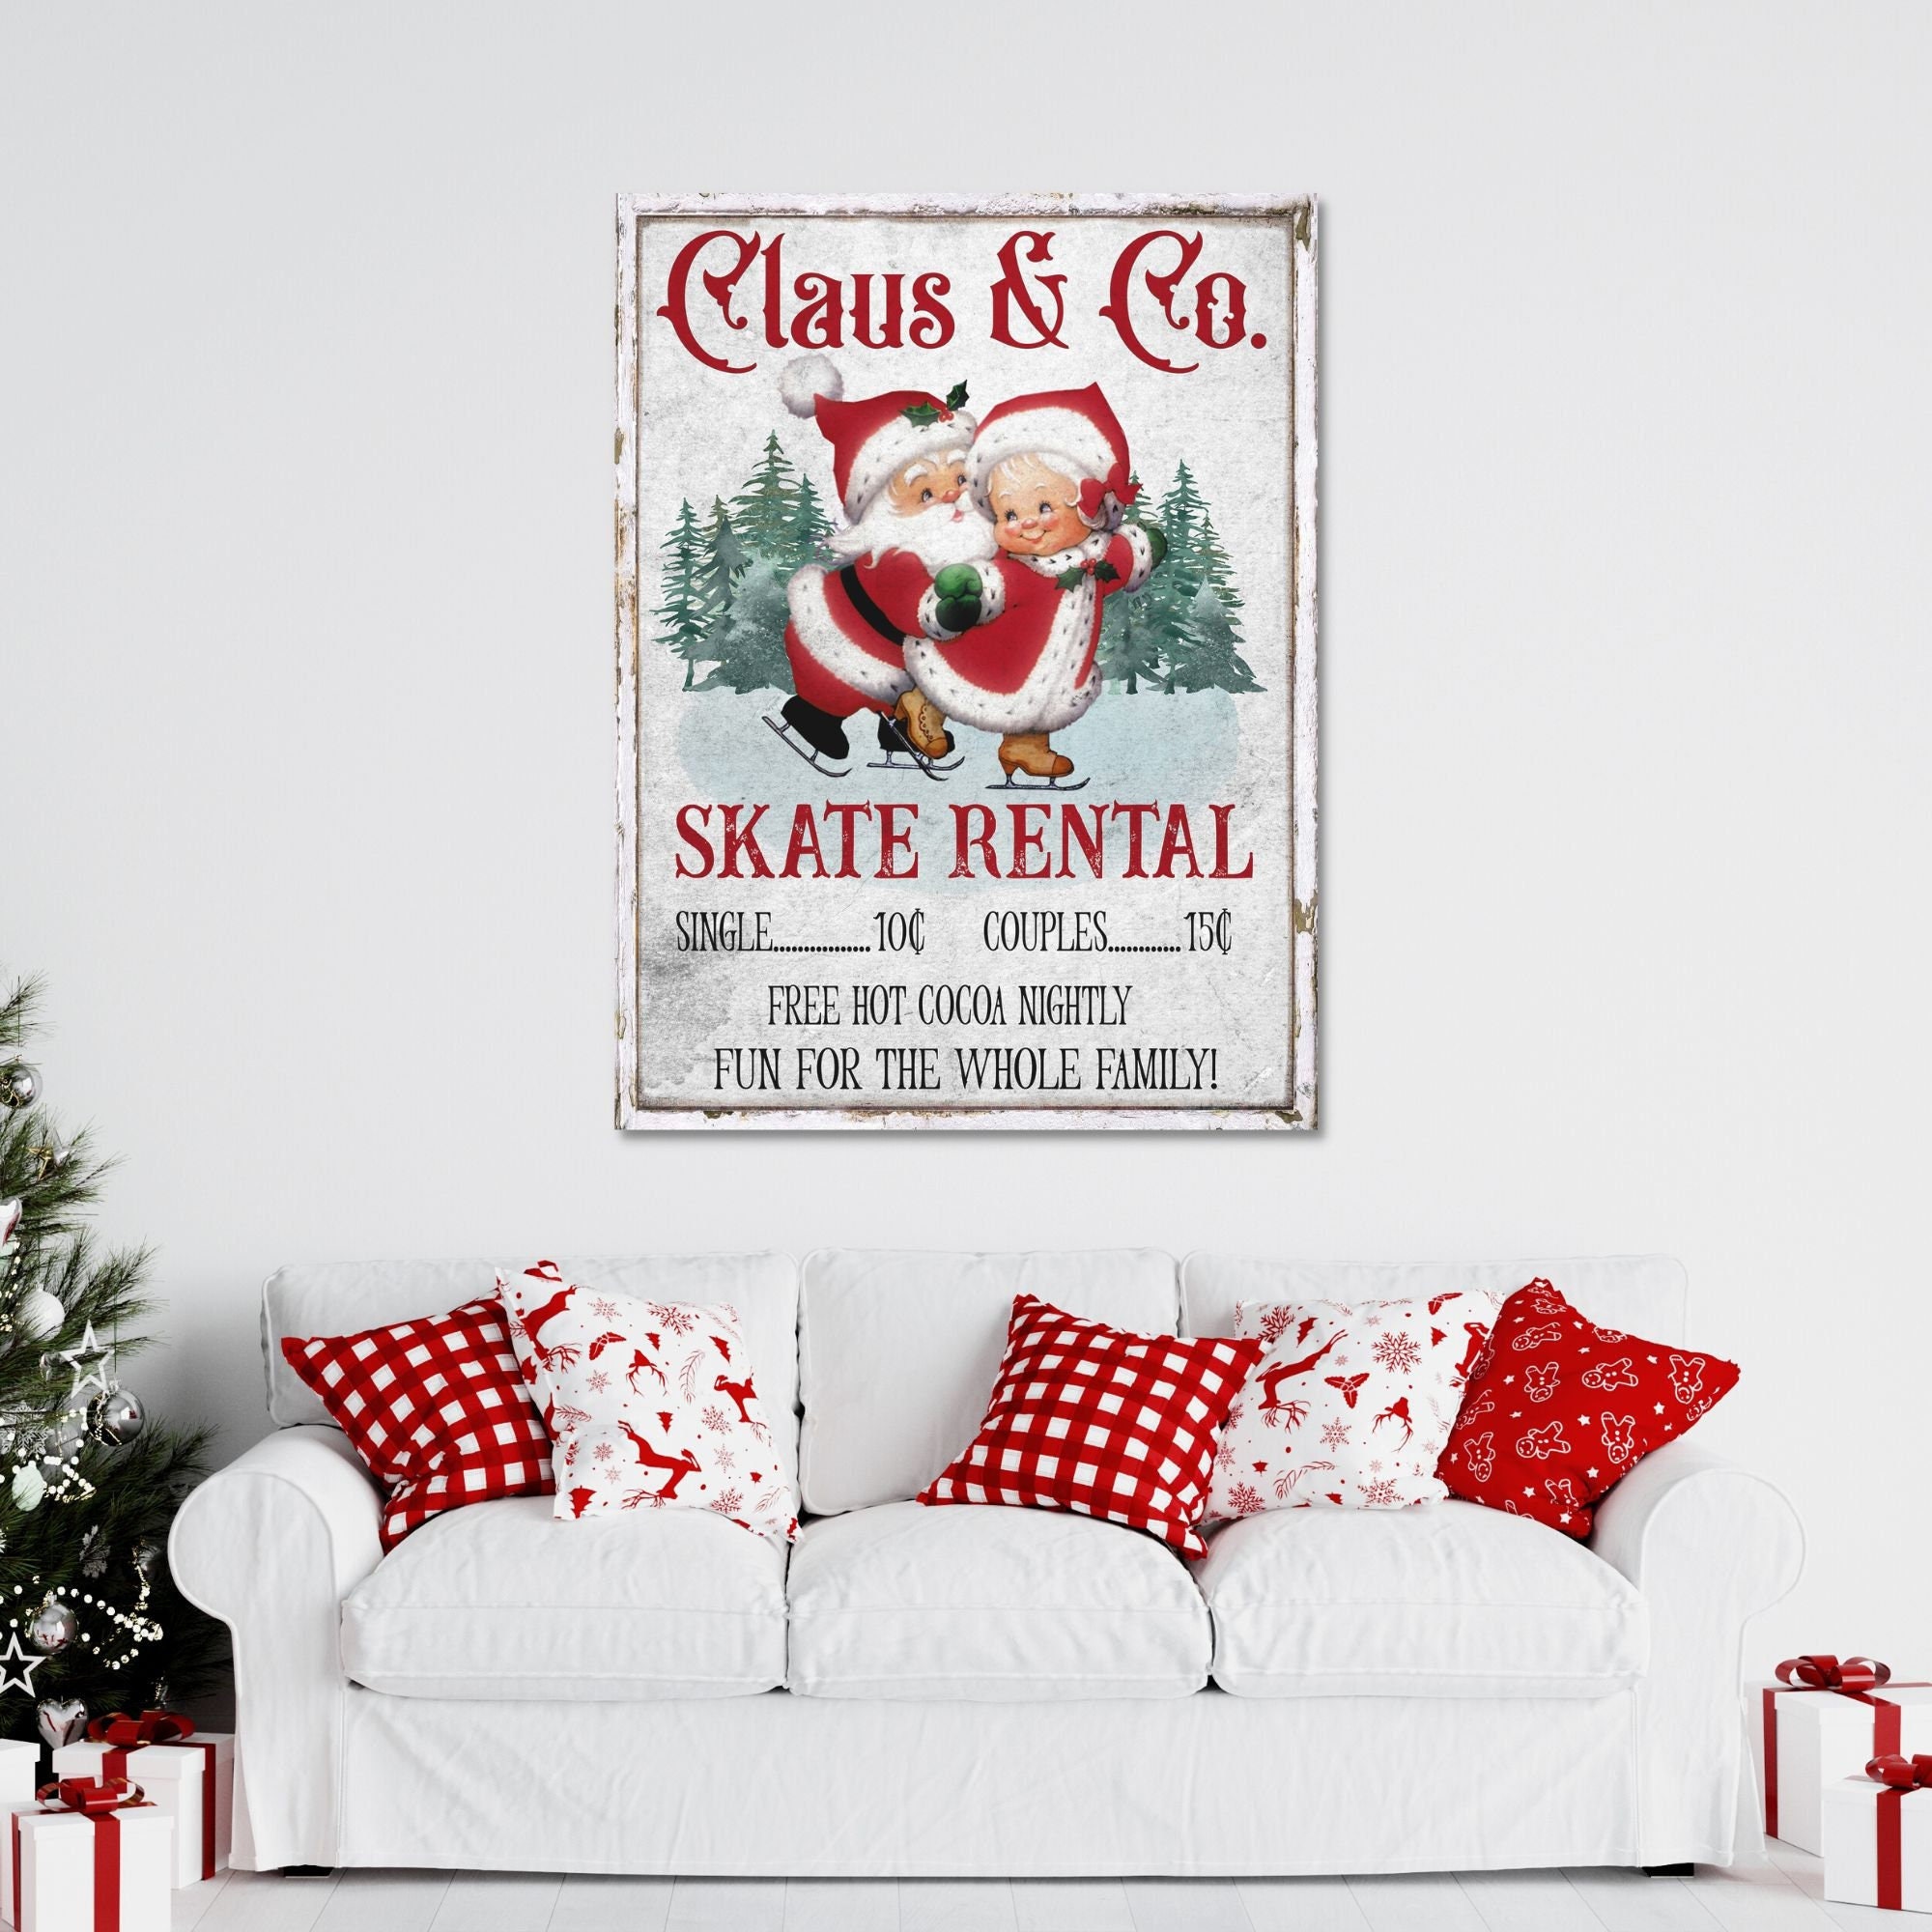 Cute Christmas Decor Santa Claus & Co Skate Rental Vintage - Etsy